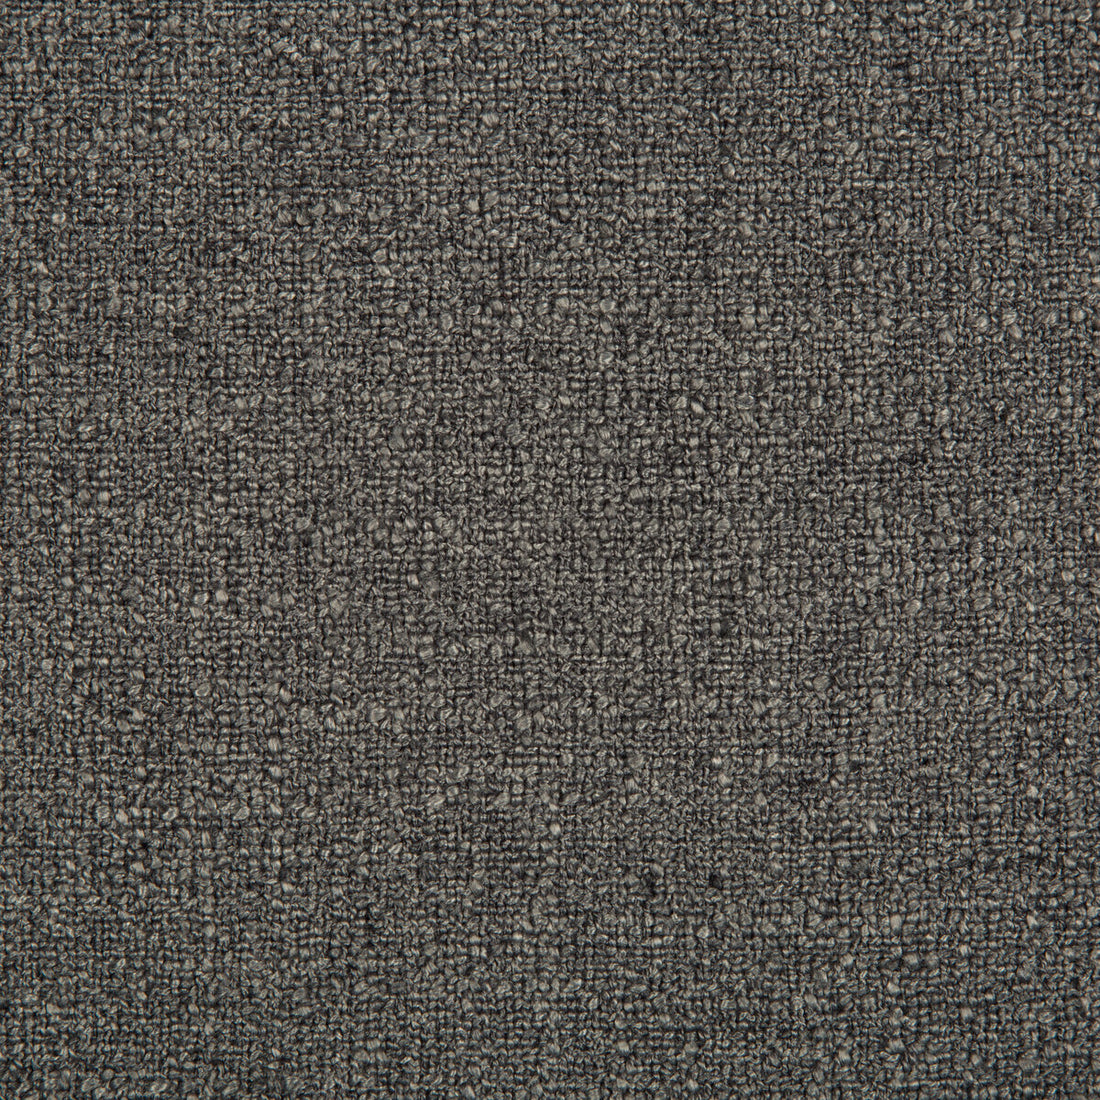 Kravet Smart fabric in 35147-21 color - pattern 35147.21.0 - by Kravet Smart